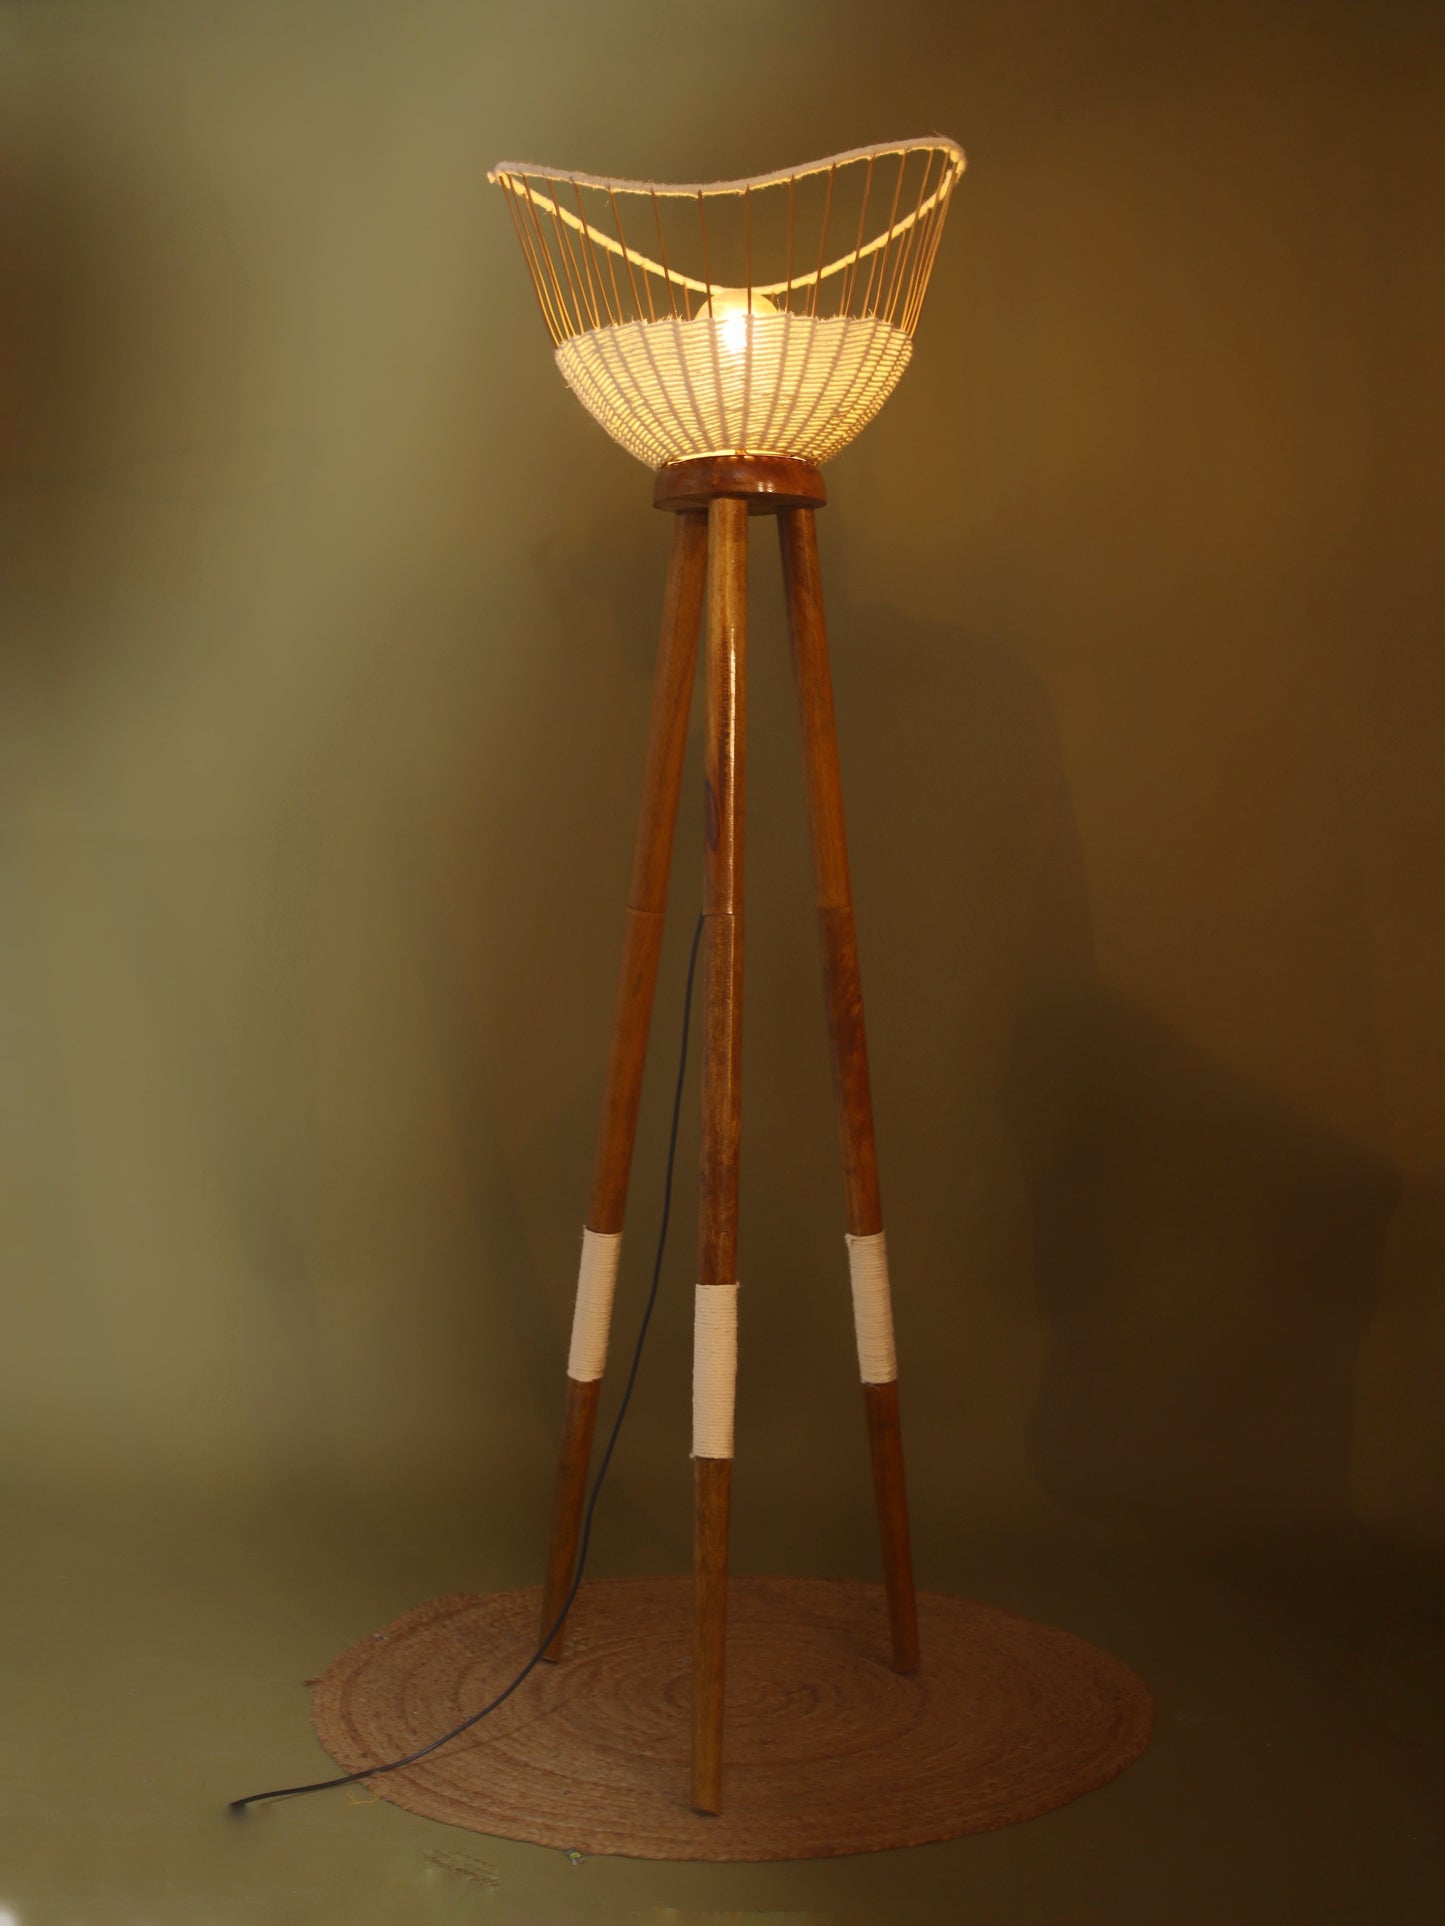 OREO FLOOR LAMP